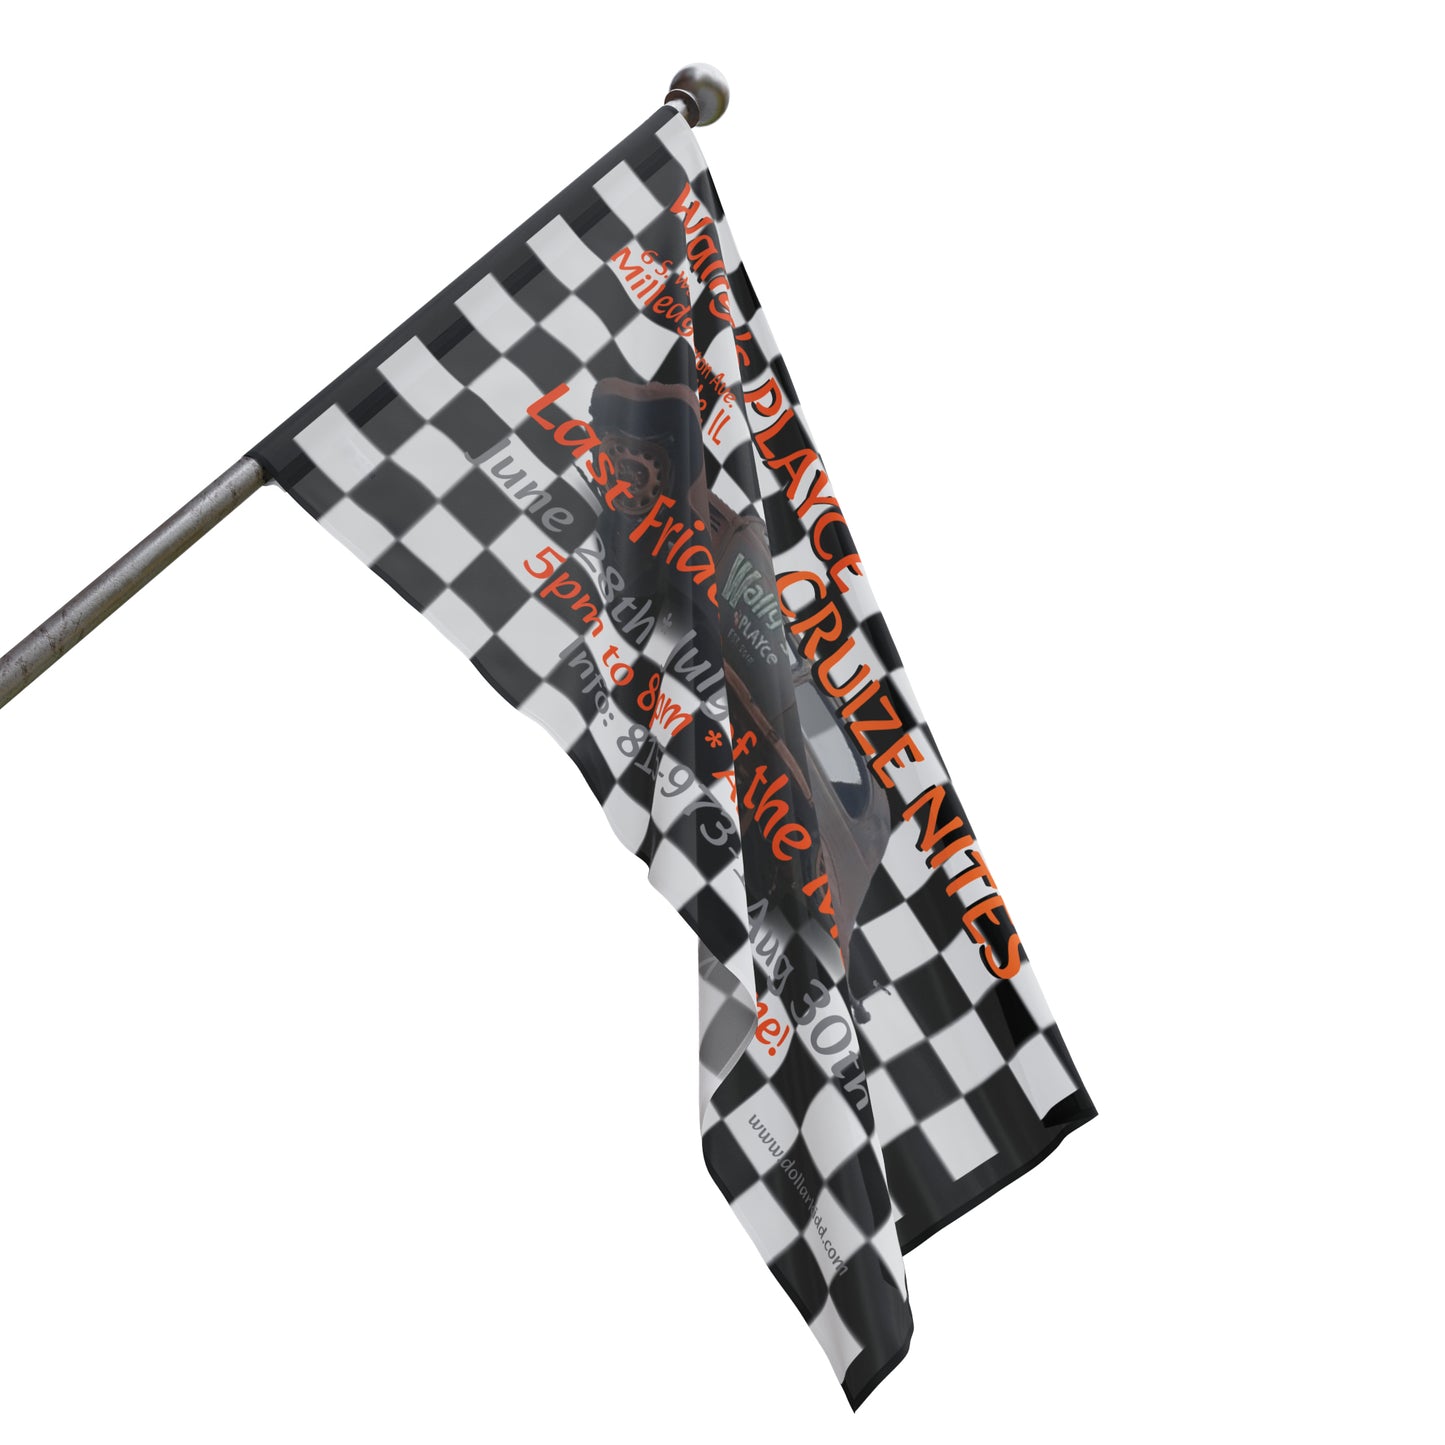 Wally's Flag 2024 Cruize Nites Checkered